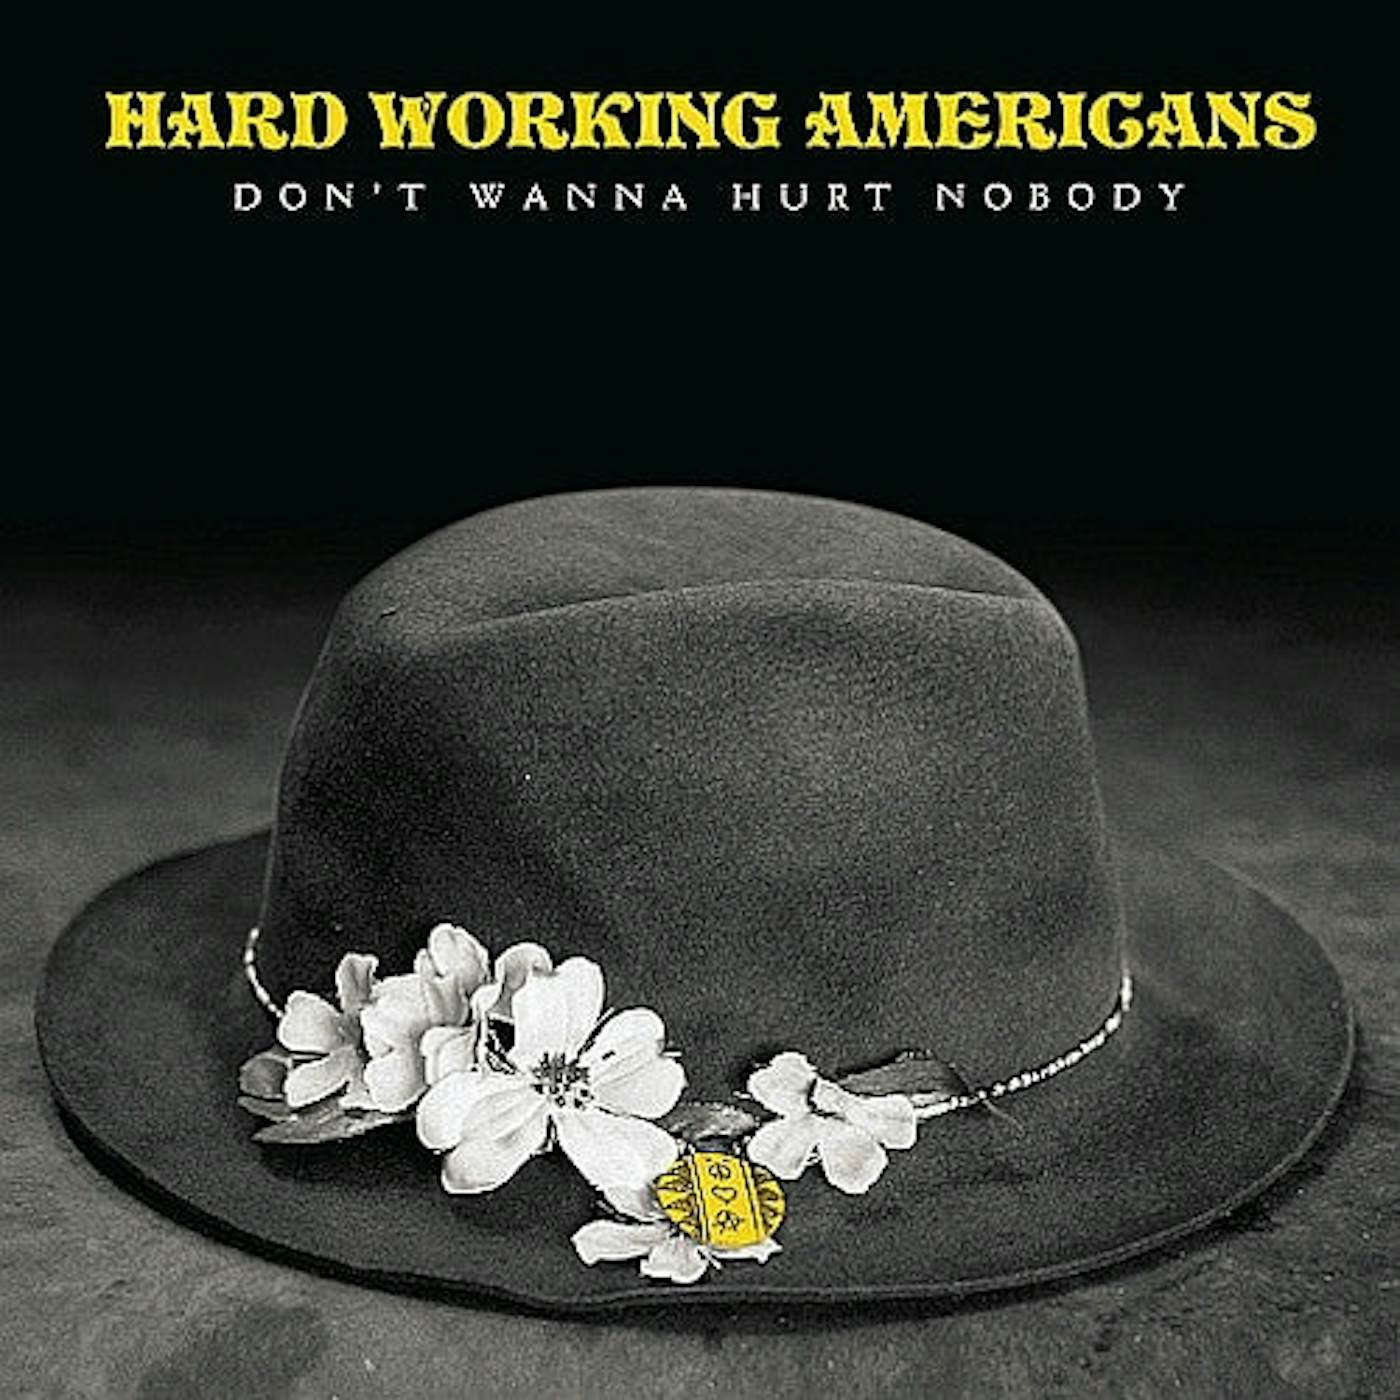 Hard Working Americans "Hurt Nobody…" 7 IN